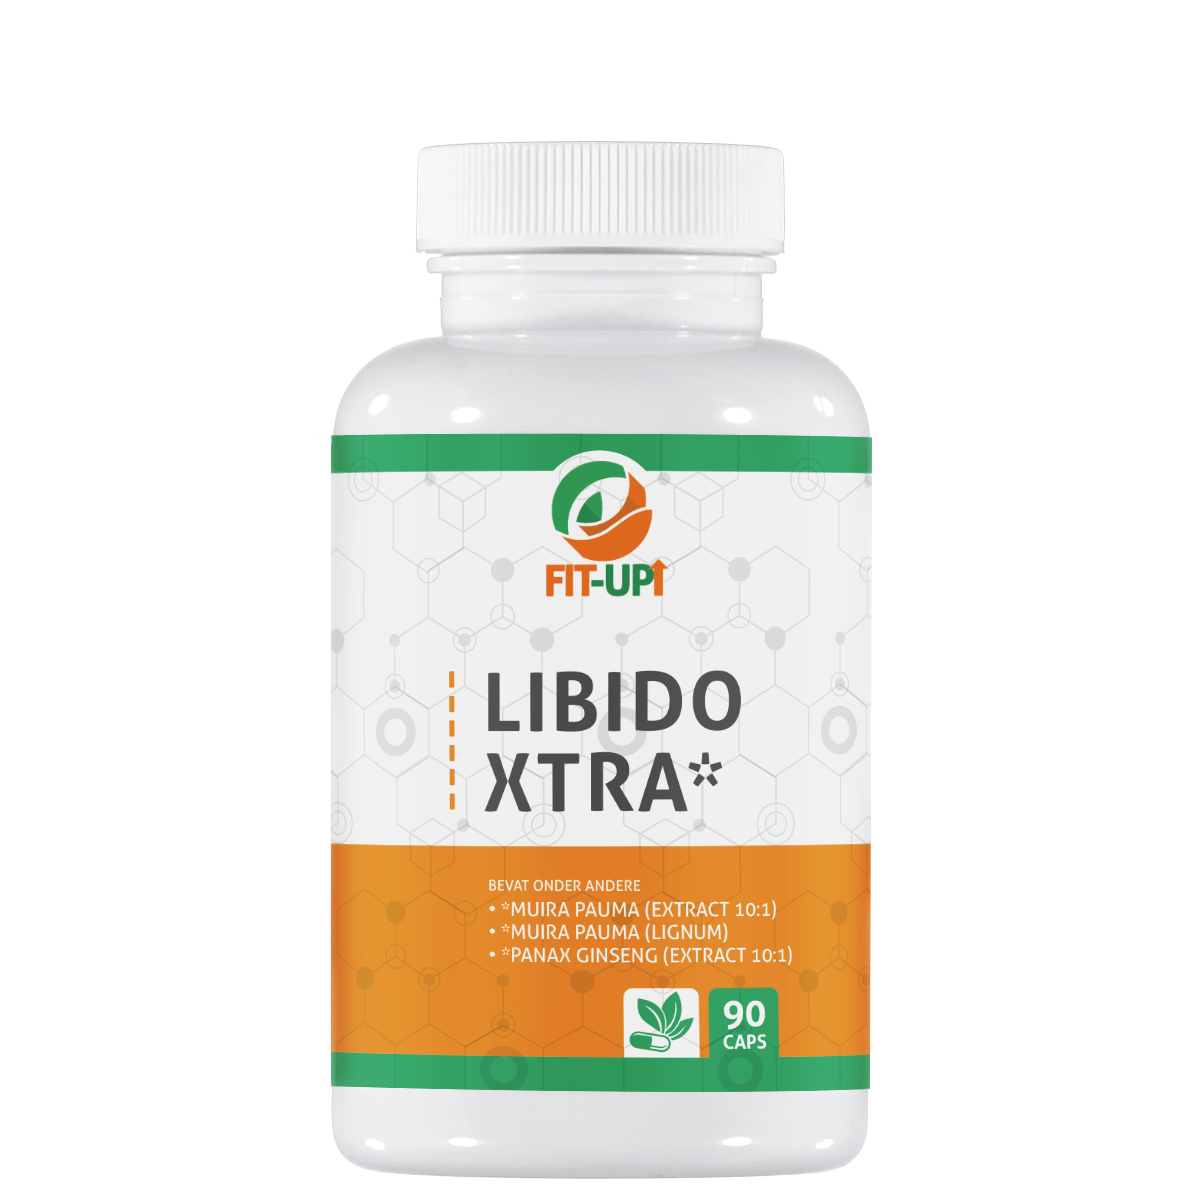 Libido XTRA | 90 capsules